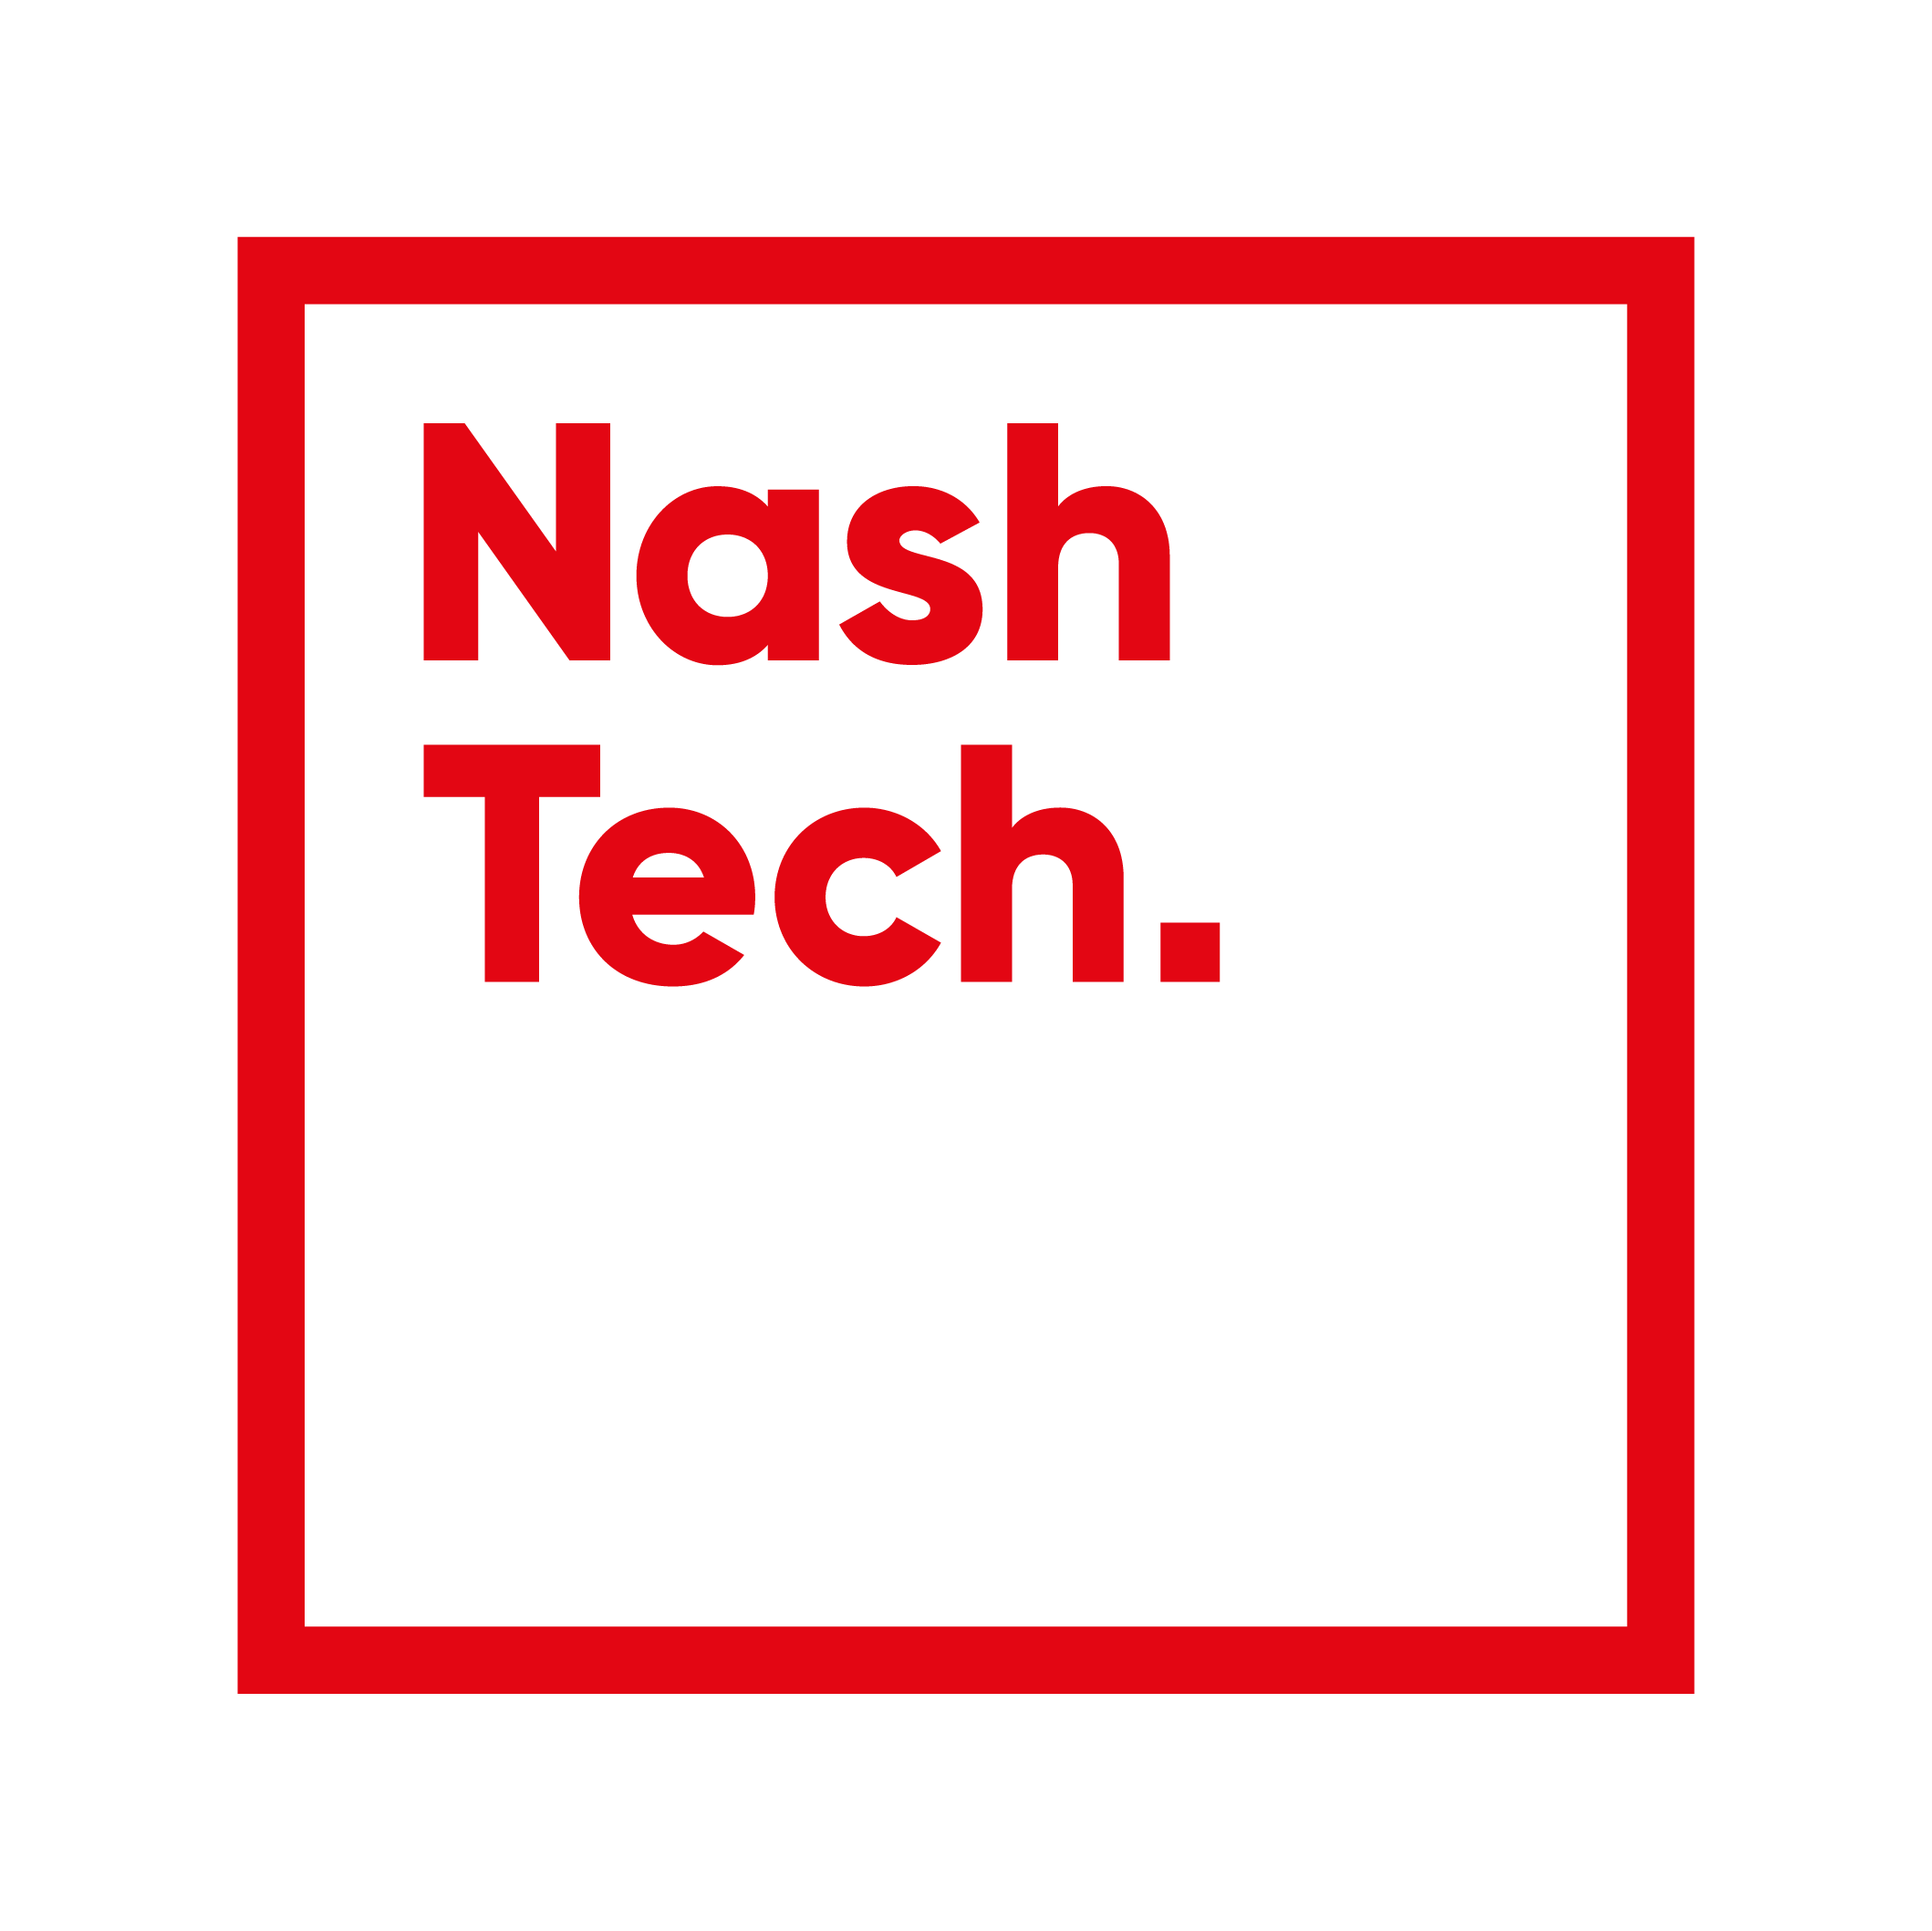 Nash_Tech_Primary_Pos_sRGB (002)